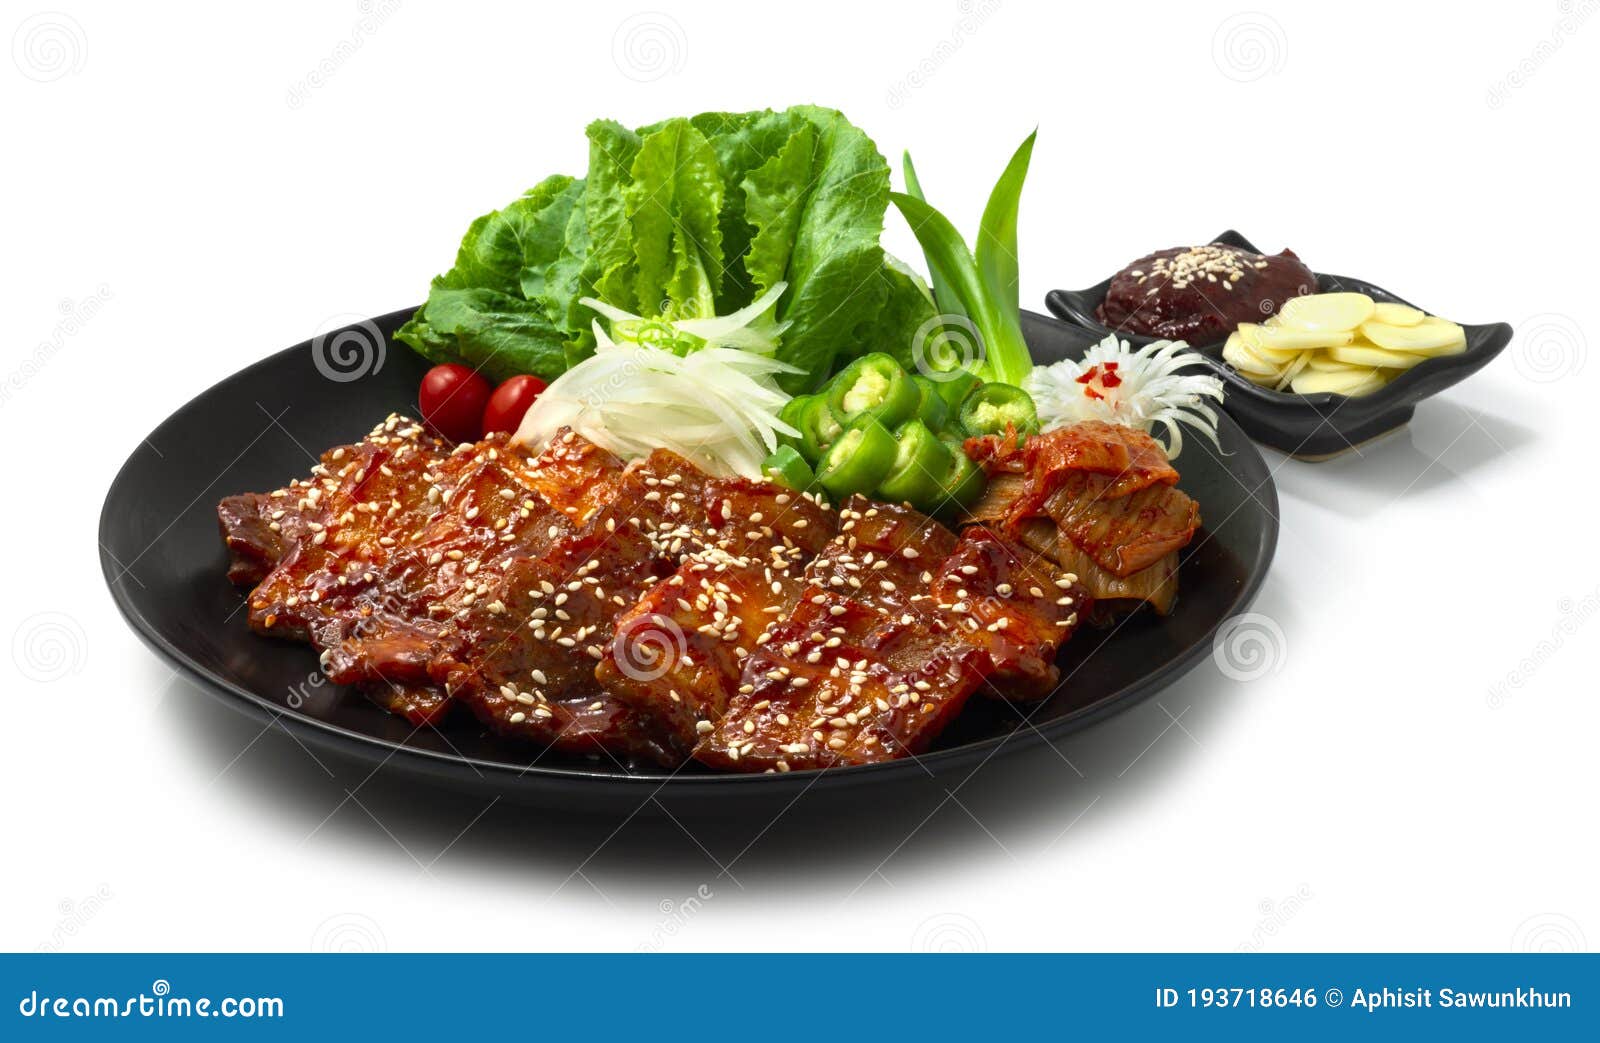 https://thumbs.dreamstime.com/z/spicy-grilled-pork-belly-kochujang-sauce-dwaeji-bulgogi-popular-spicy-korean-bbq-spicy-grilled-pork-belly-kochujang-193718646.jpg